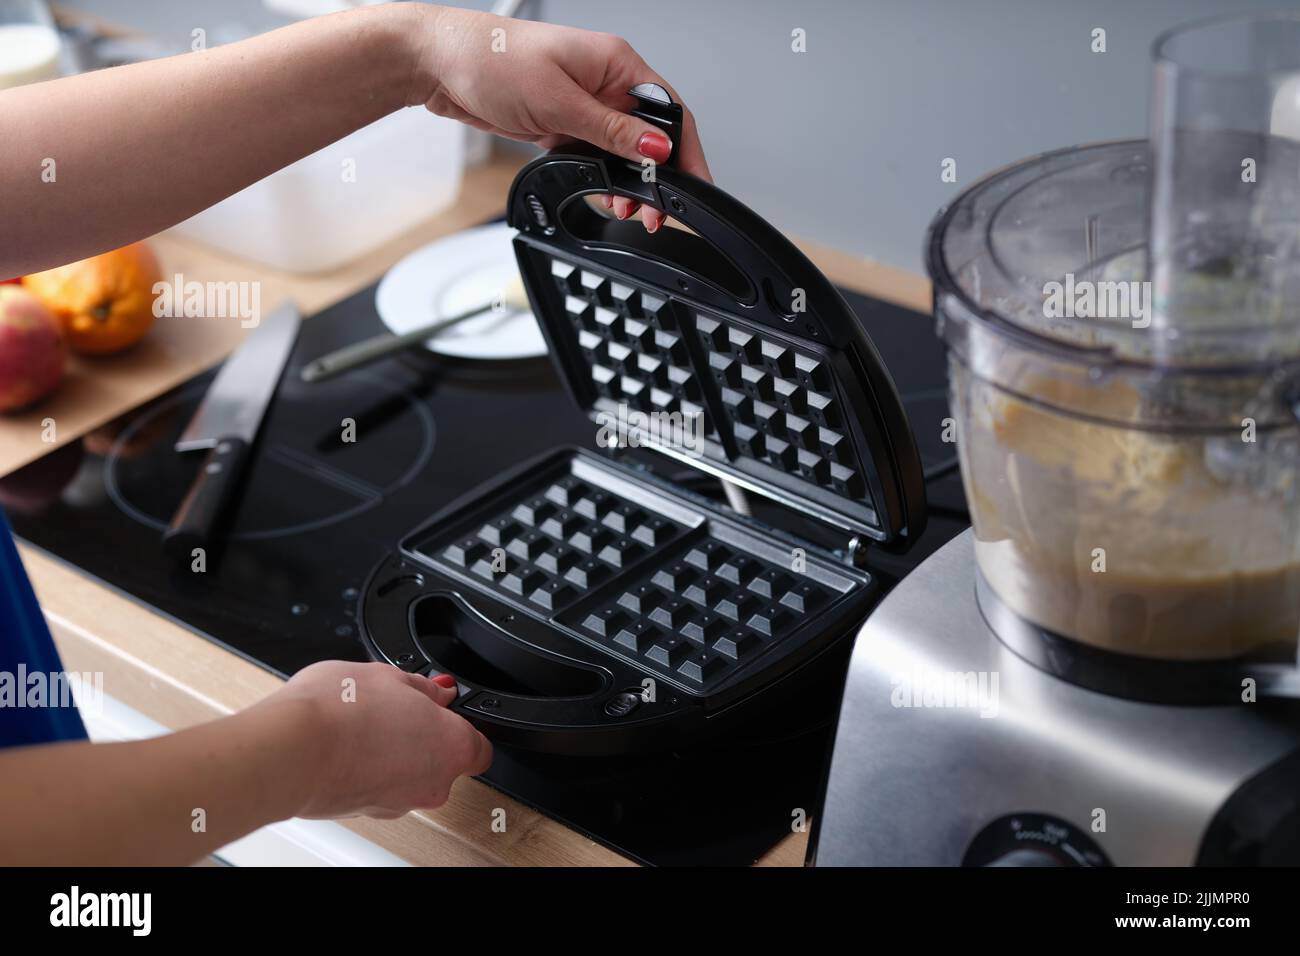 Woman has prepared Belgian waffle dough and opens electric waffle iron Stock Photo